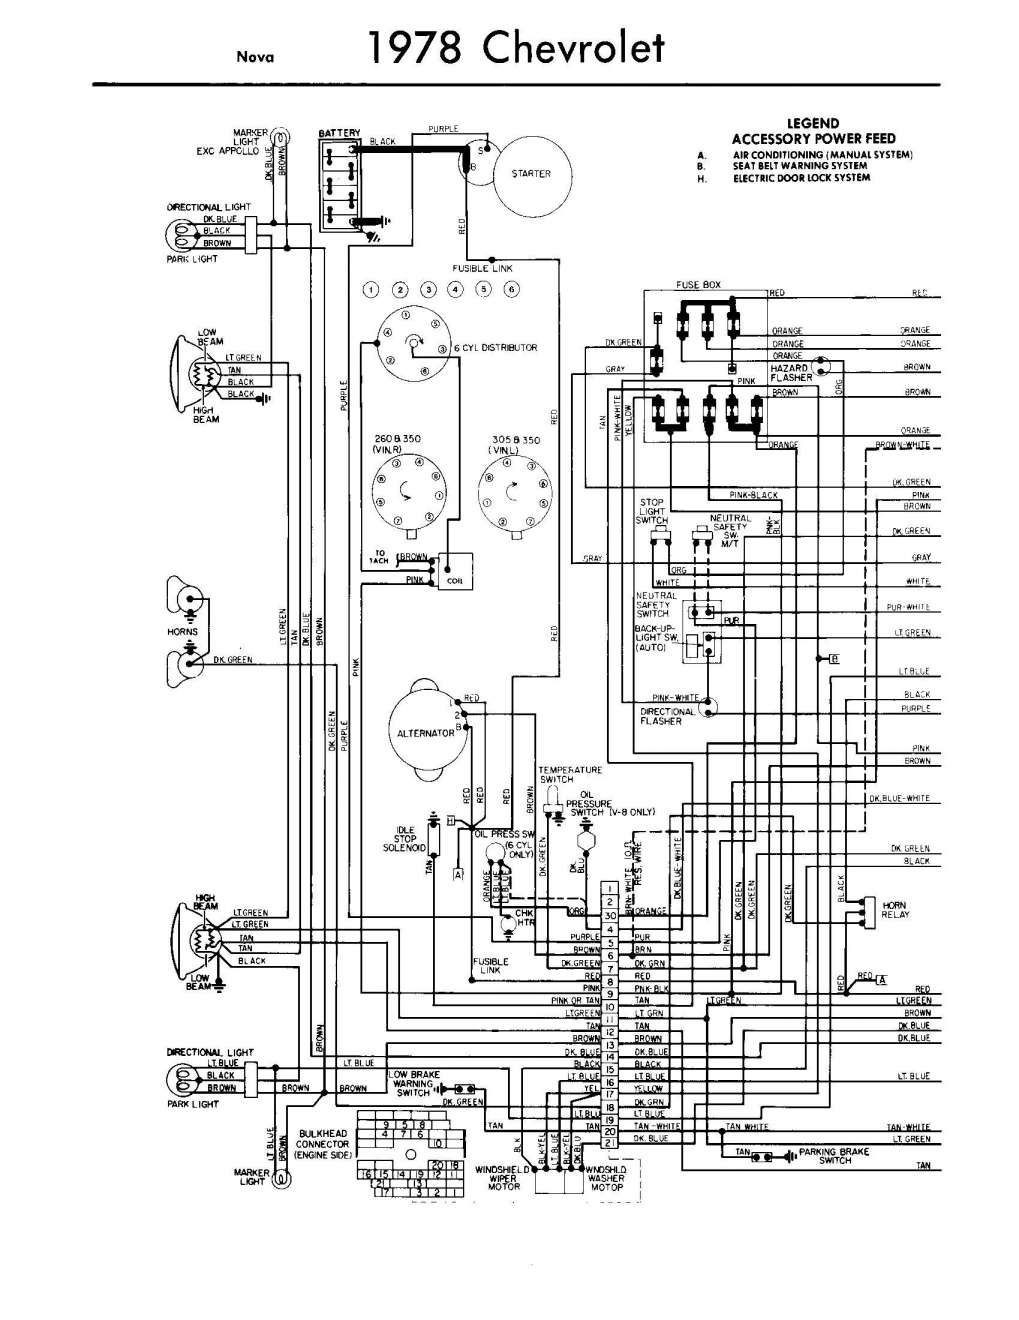 1979 Chevy Pickup Radio Wiring Diagram 1979 Chevy C10 Pick Up Wiring Diagram Free Download Of 1979 Chevy Pickup Radio Wiring Diagram